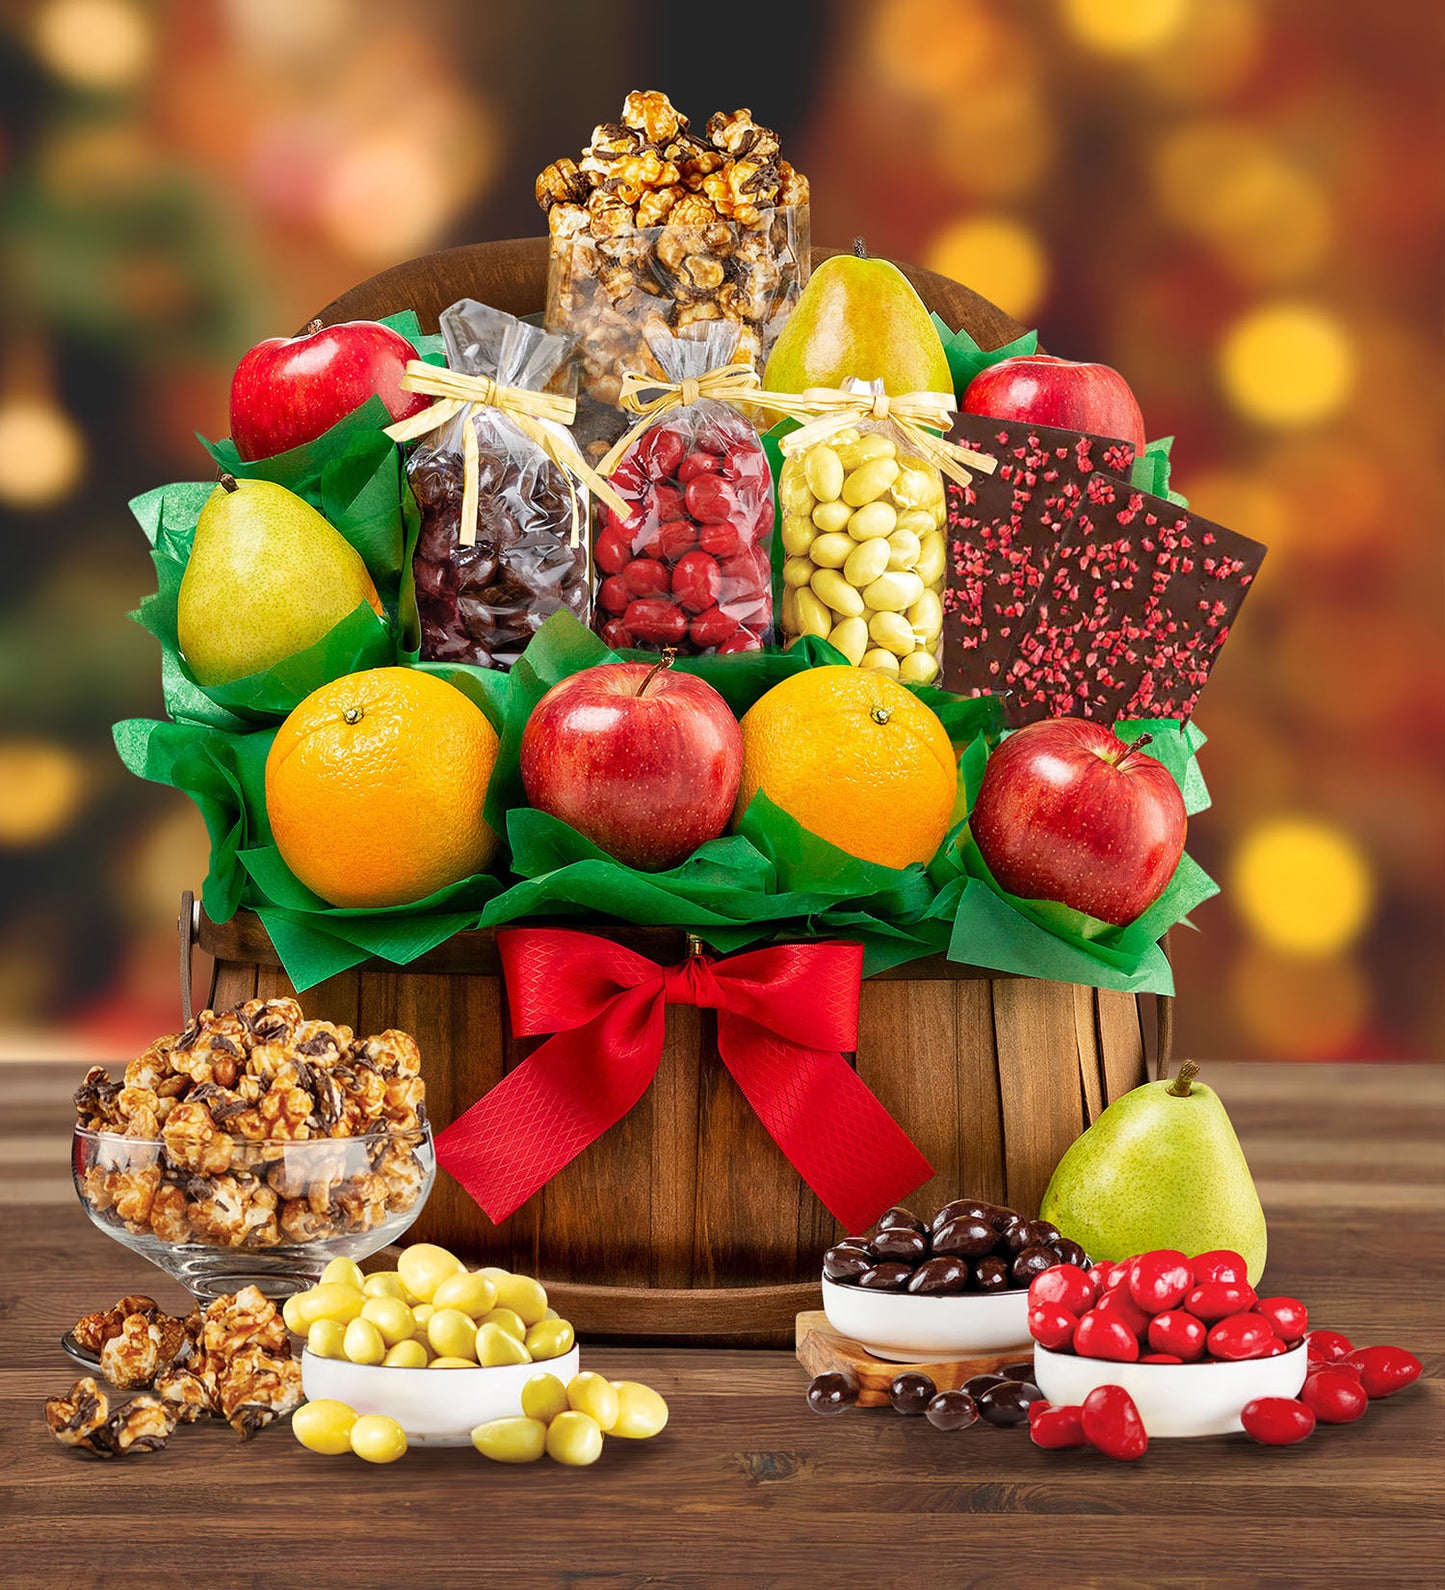 Orchard Fruit and Chocolates Holiday Gift Basket